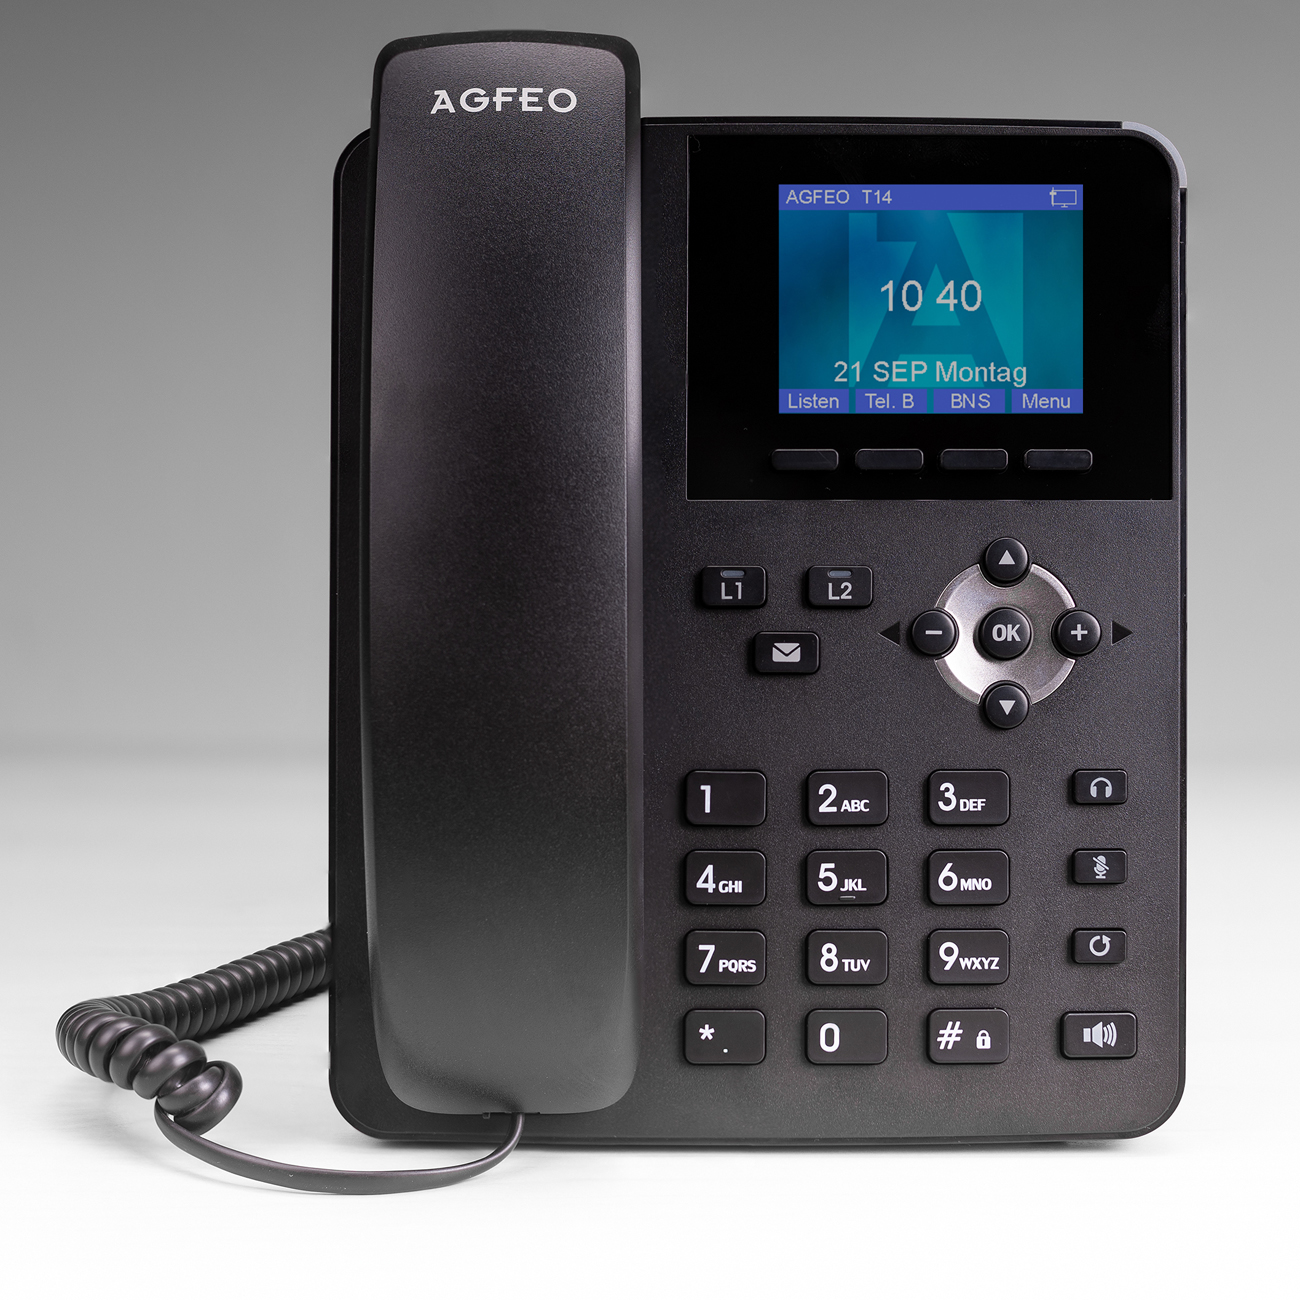 Agfeo 6101690, Telefone, AGFEO Telefon T14 SIP schwarz 6101690 (BILD1)